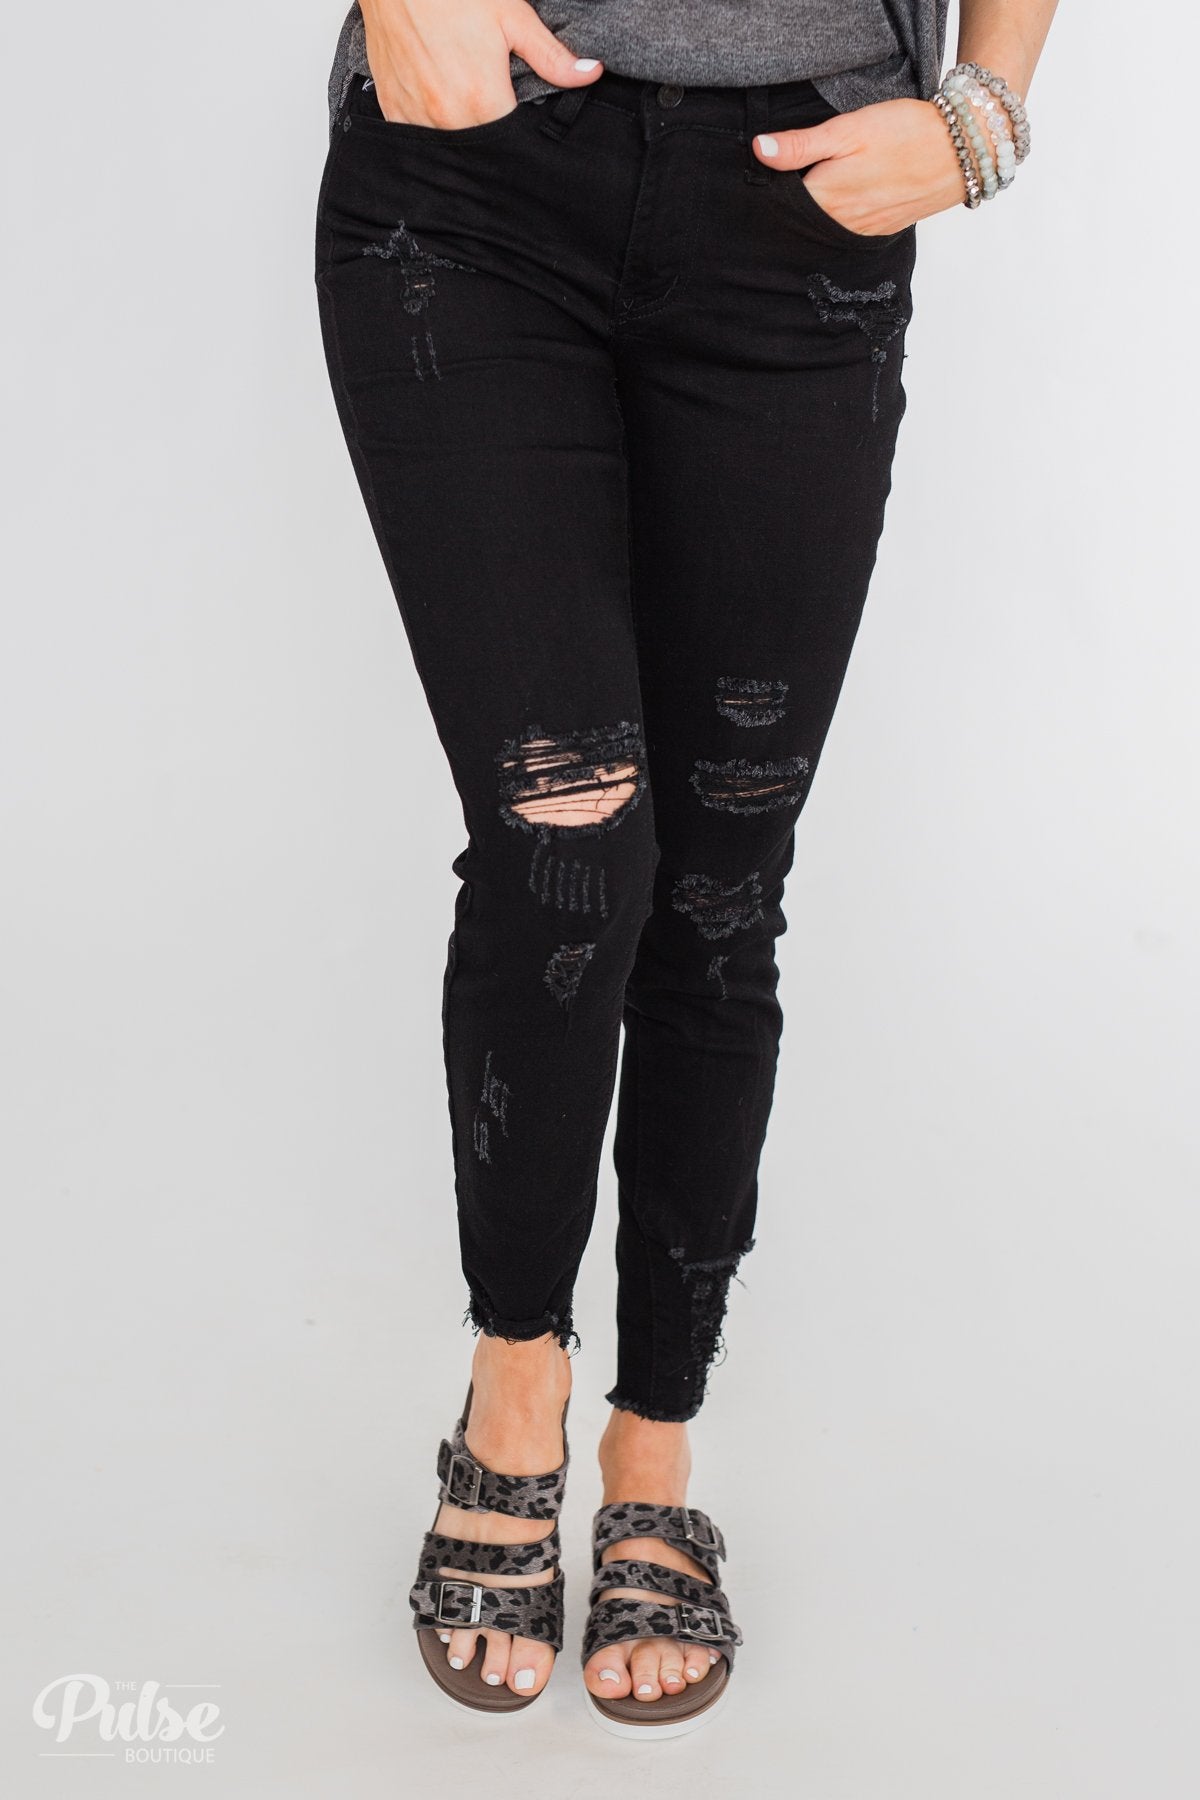 KanCan Callie Jeans- Black Distressed